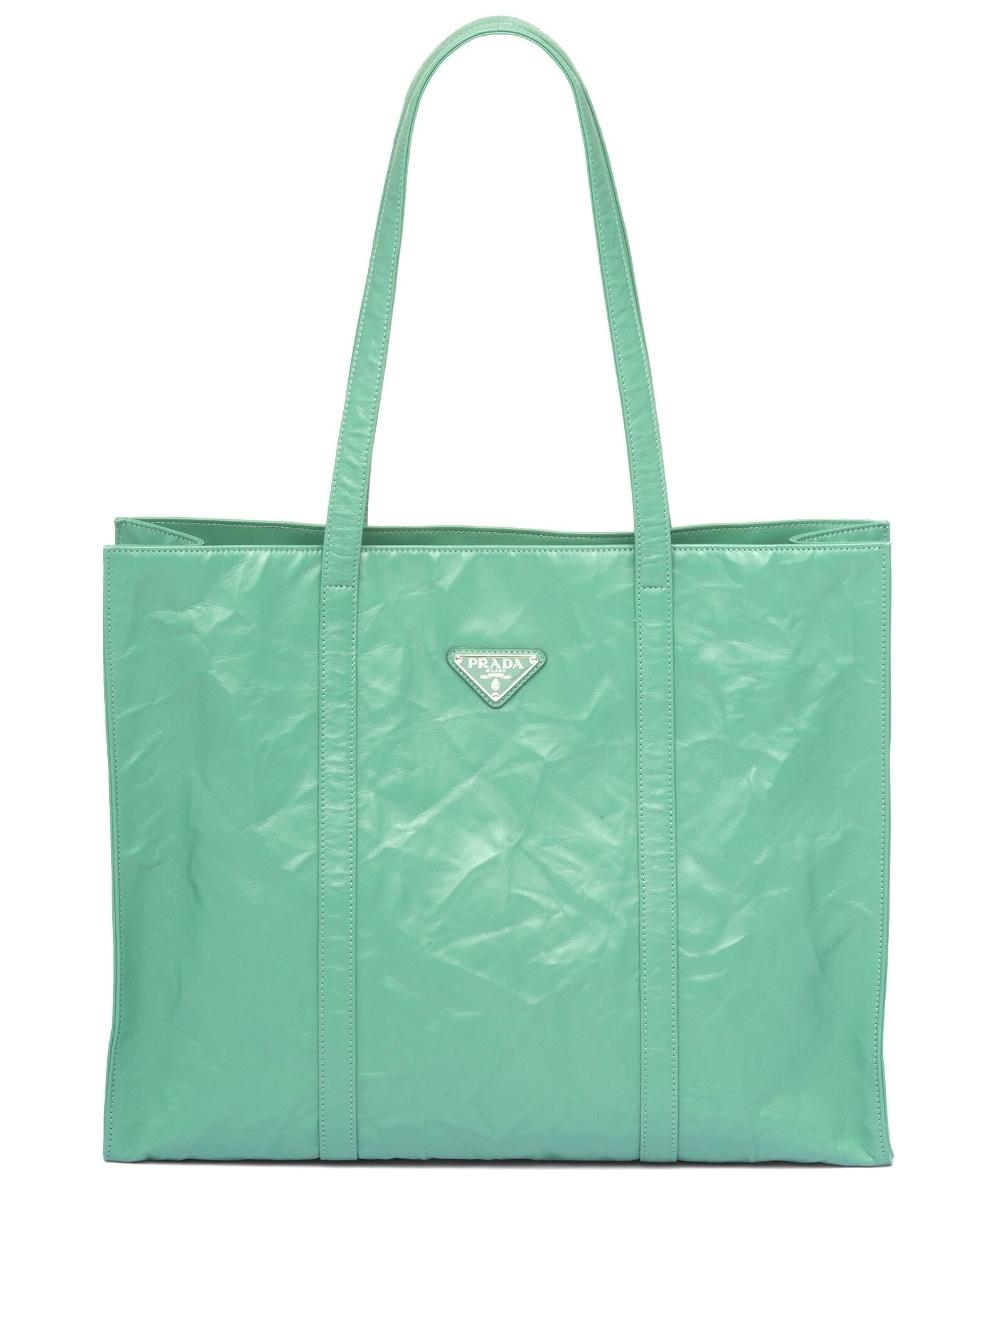 Prada Nappa-leather Tote Bag in Green | Lyst